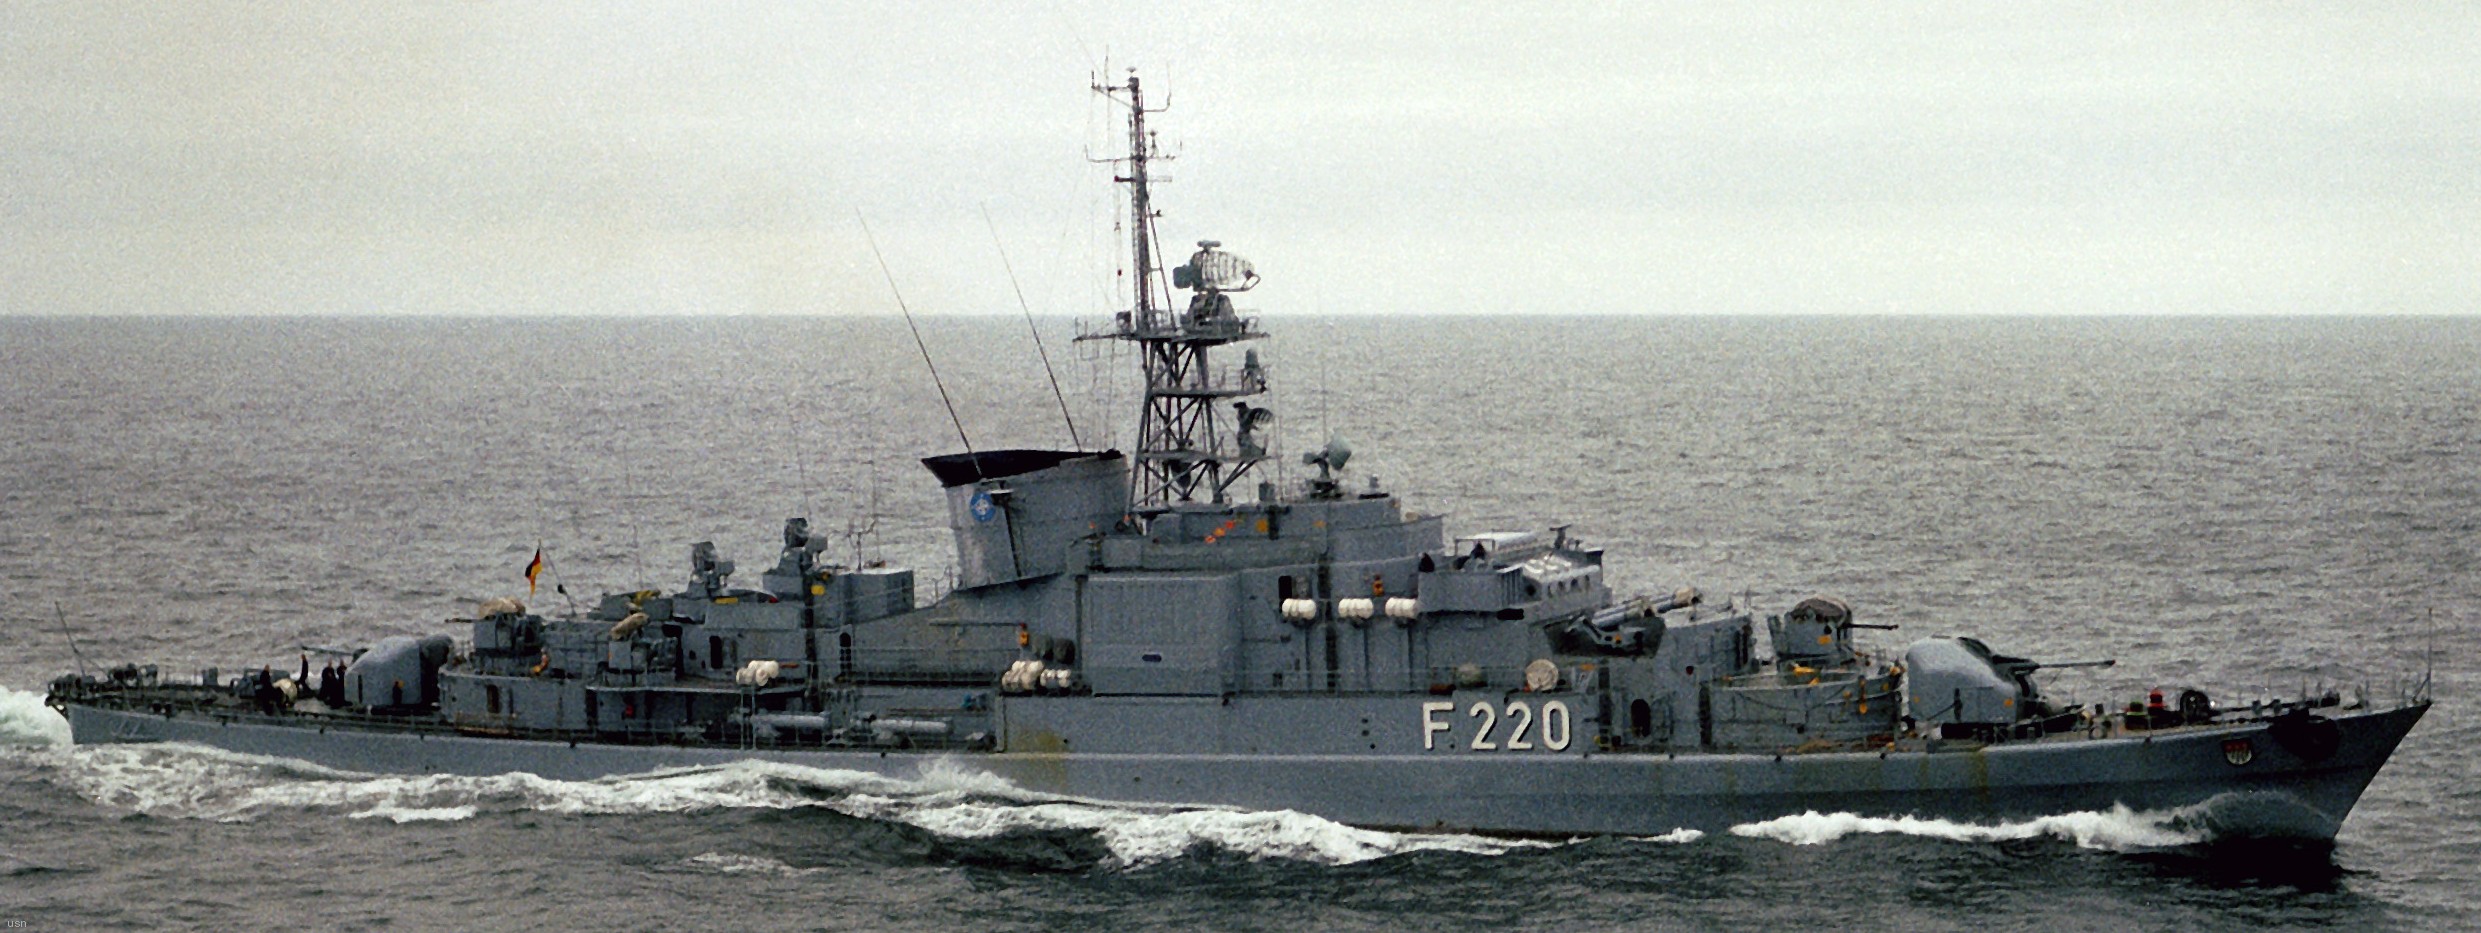 f-220 fgs köln koln type 122 class frigate german navy 02